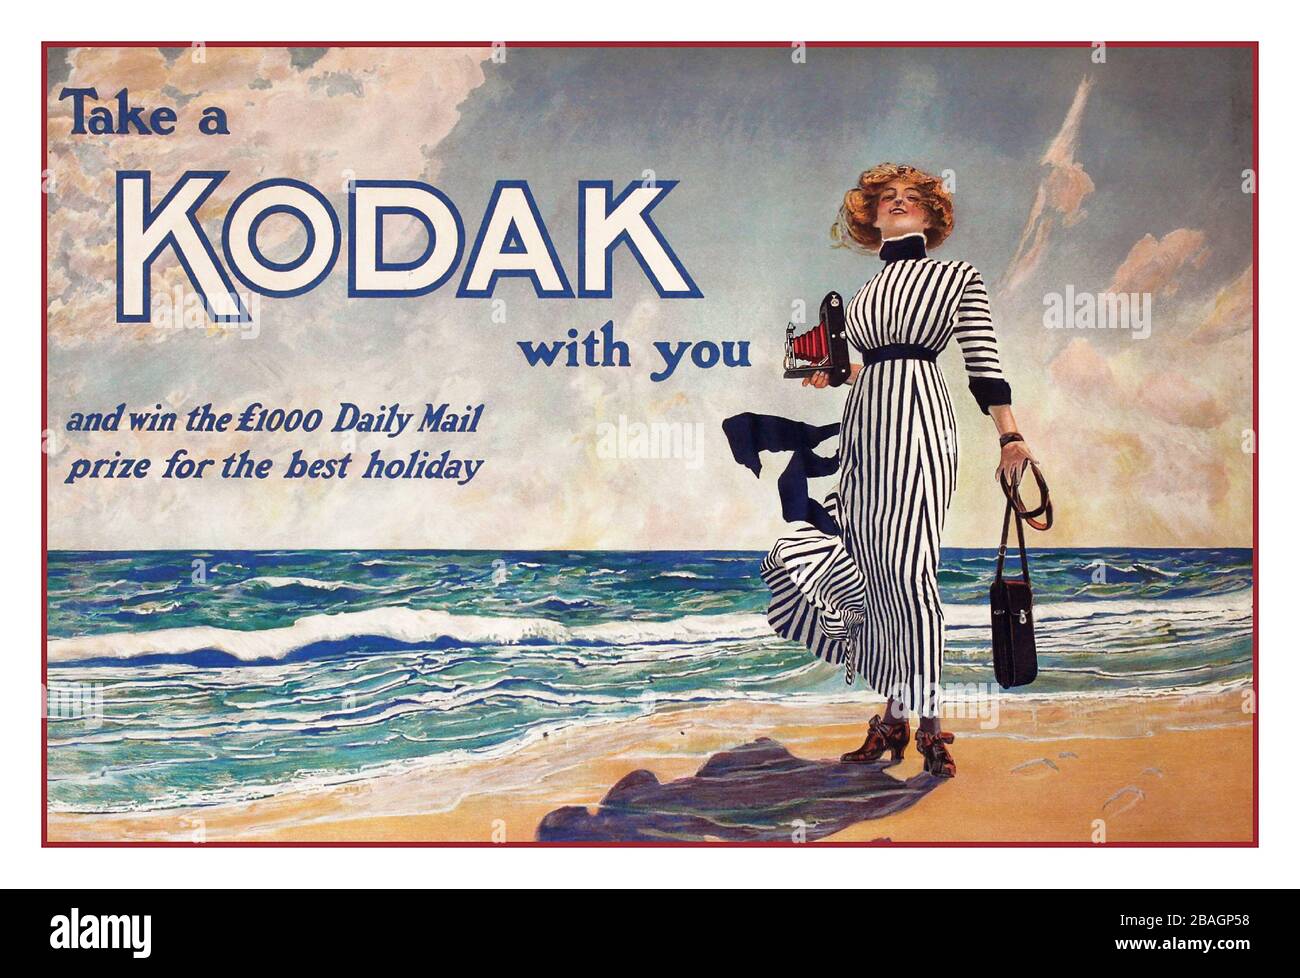 Kodak Girl Archive 1900s Publicidad histórica Kodak 'Take a Kodak with you and win the Daily Mail prize £1000 for the best holiday', impresa en la letra c.1913 Foto de stock